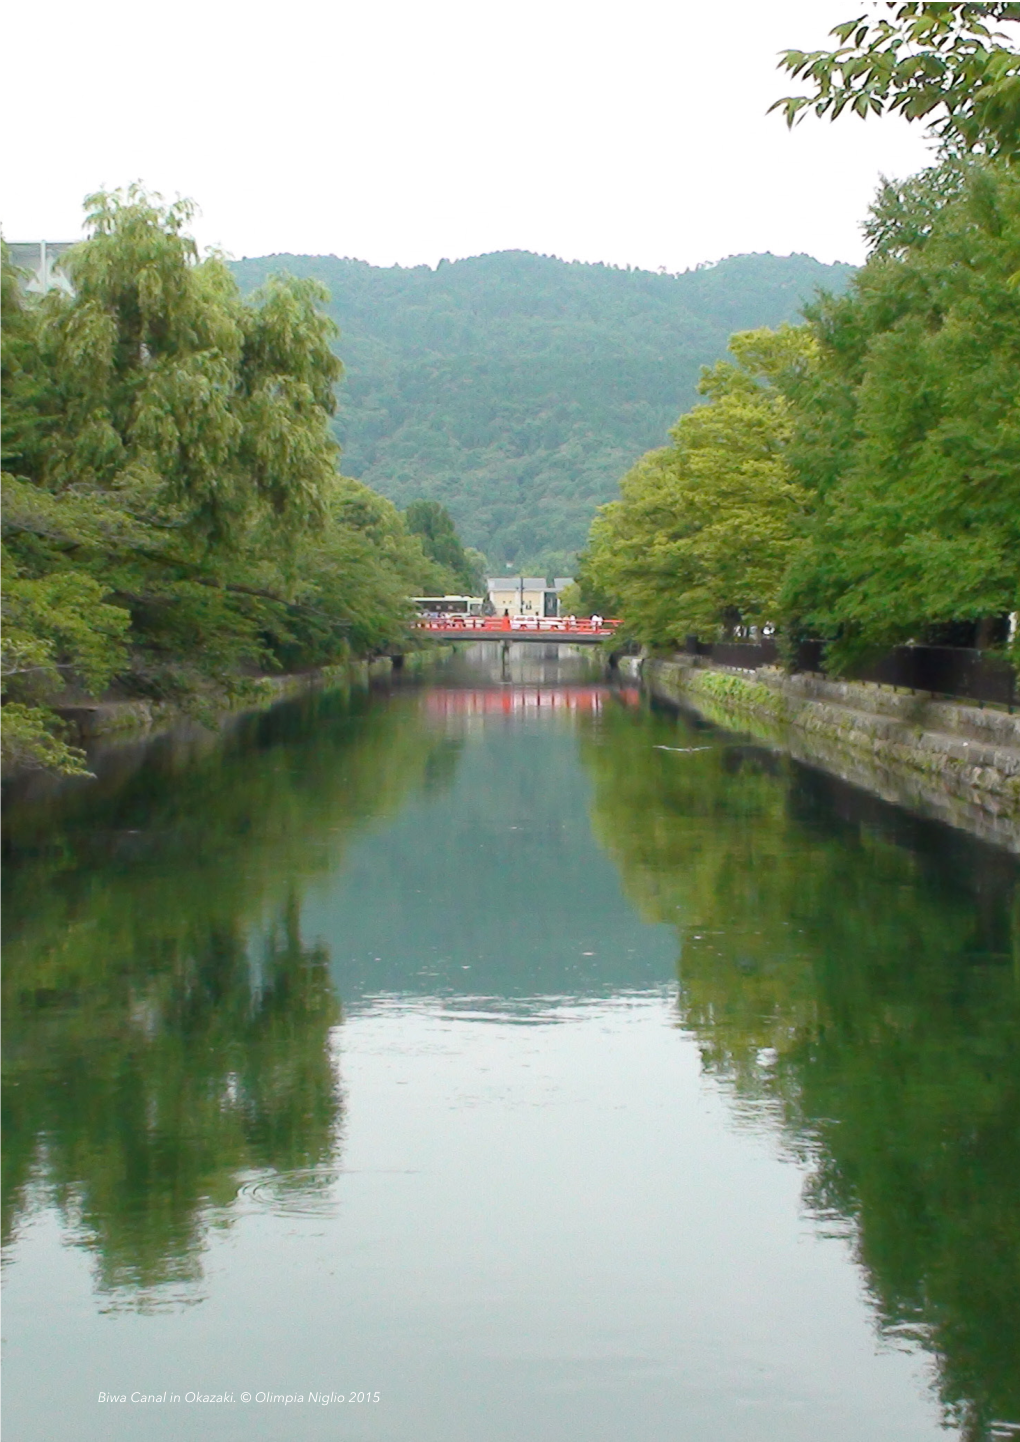 Biwa Canal in Okazaki. © Olimpia Niglio 2015 !# !"#$%&"' ()#*$)+#"')+,-.'%$)+,- '/-0$12"#*1#%$*- 3*12)','45-+)6- 7%8#+")+9","#5 !',%:*-;